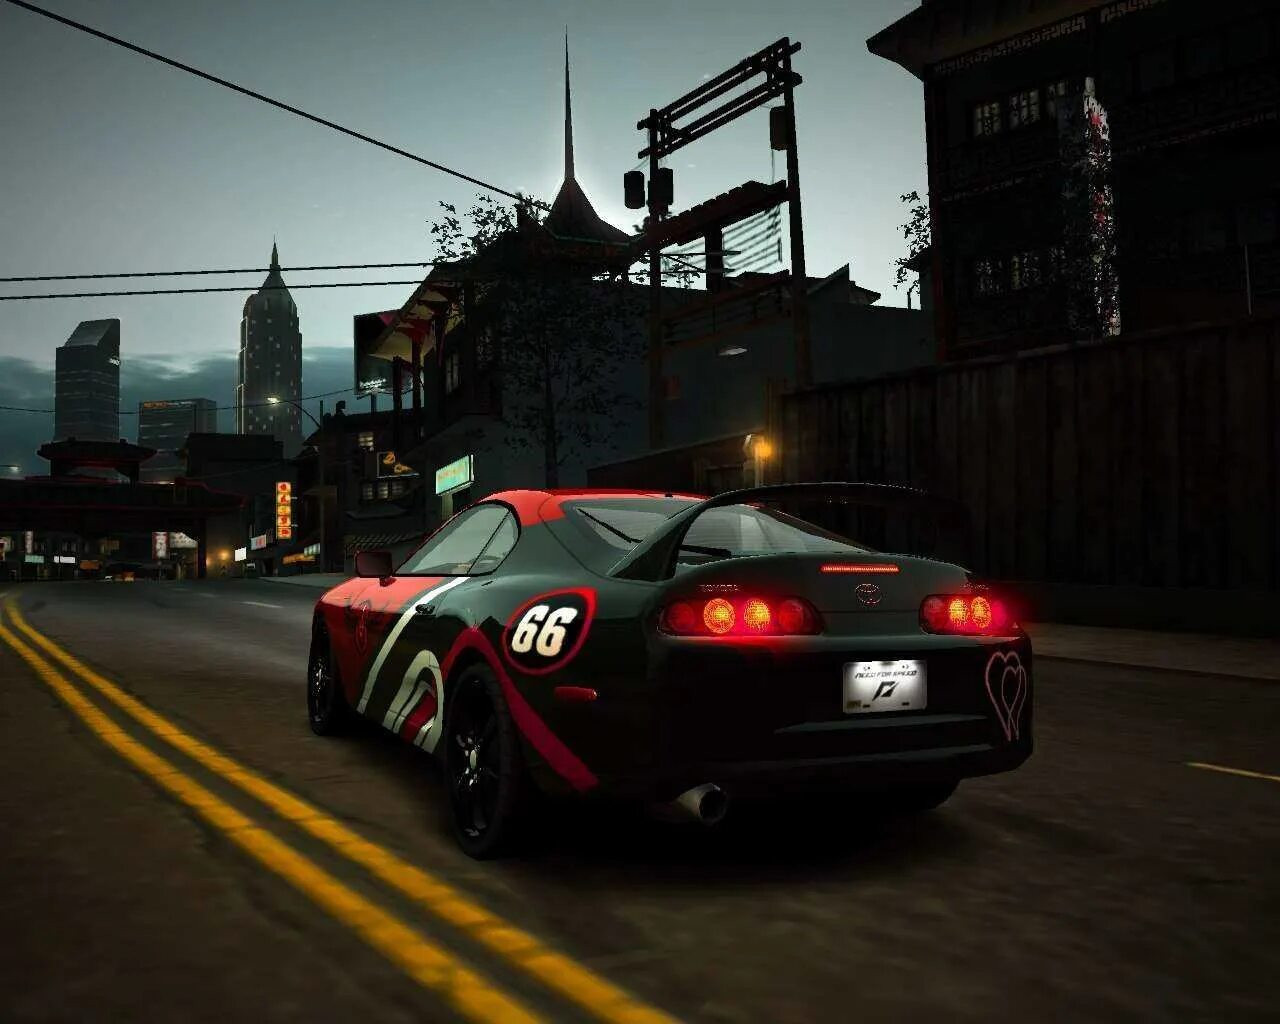 Ворлд спид. NFS World Xbox 360. Need for Speed World винилы Alfa Romeo 4c. Need for Speed World stafford699. NFS World 3010.